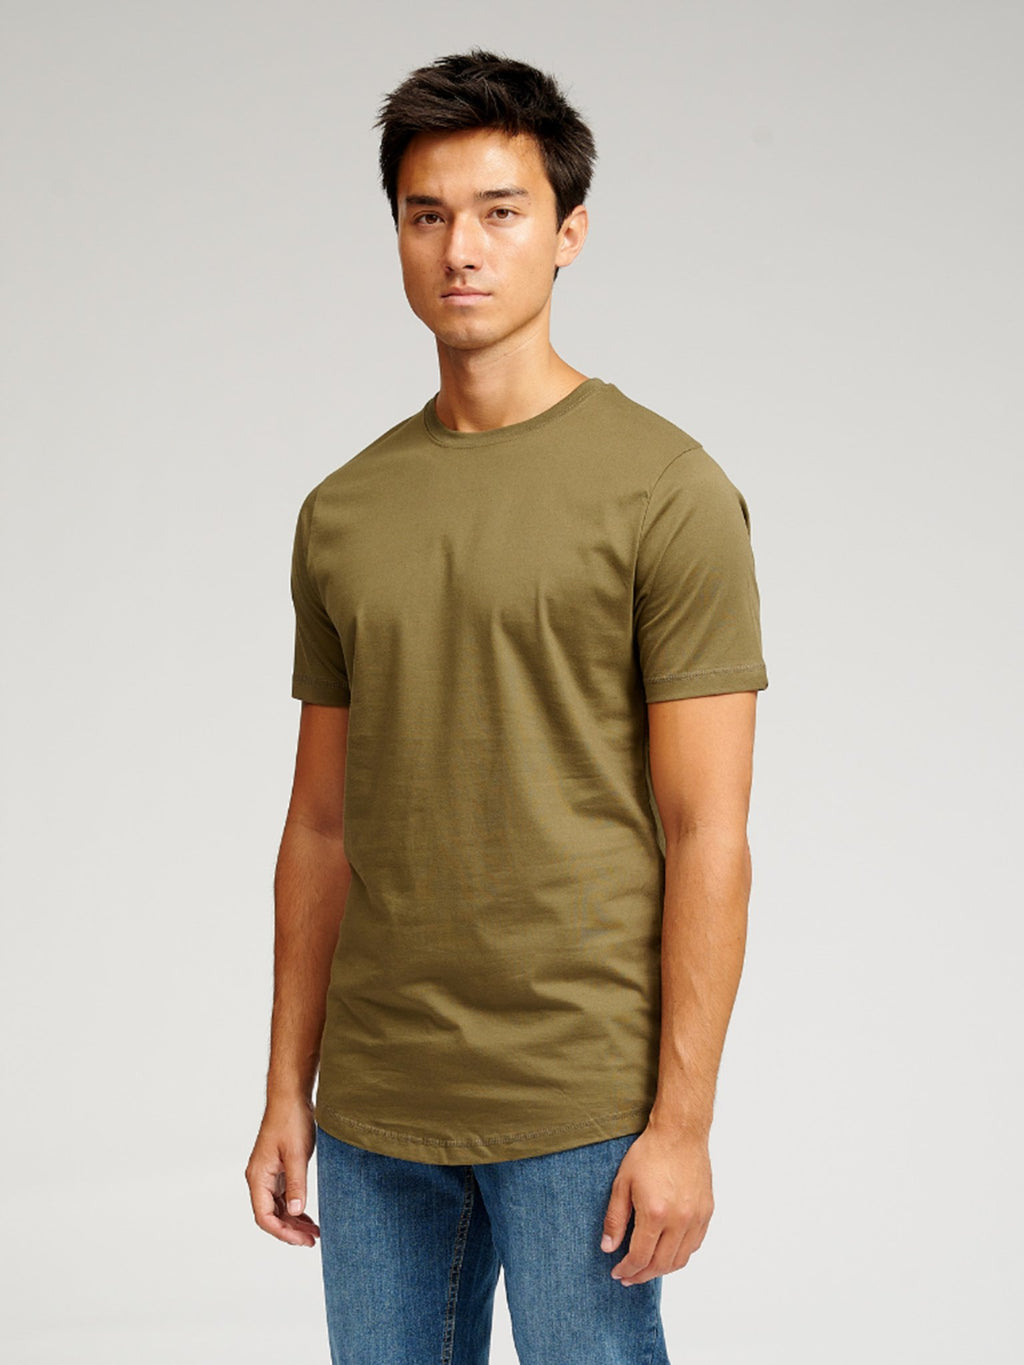 T -shirt lunga - Green dell'esercito